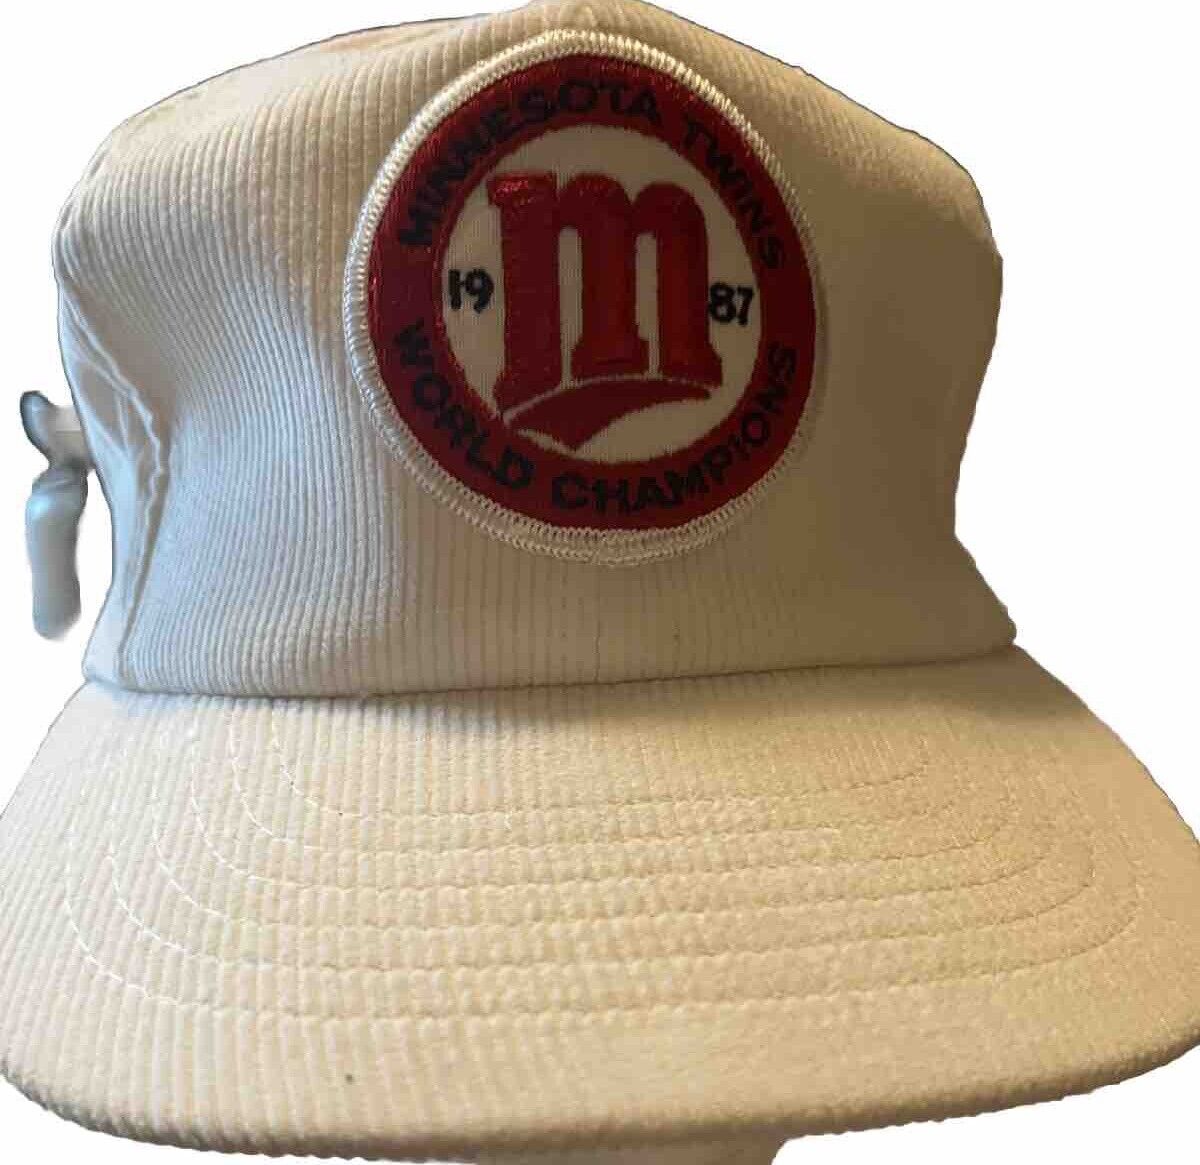 Minnesota Twins 1987 World Champions Vtg Corduroy Snapback Cap Hat. NWOT